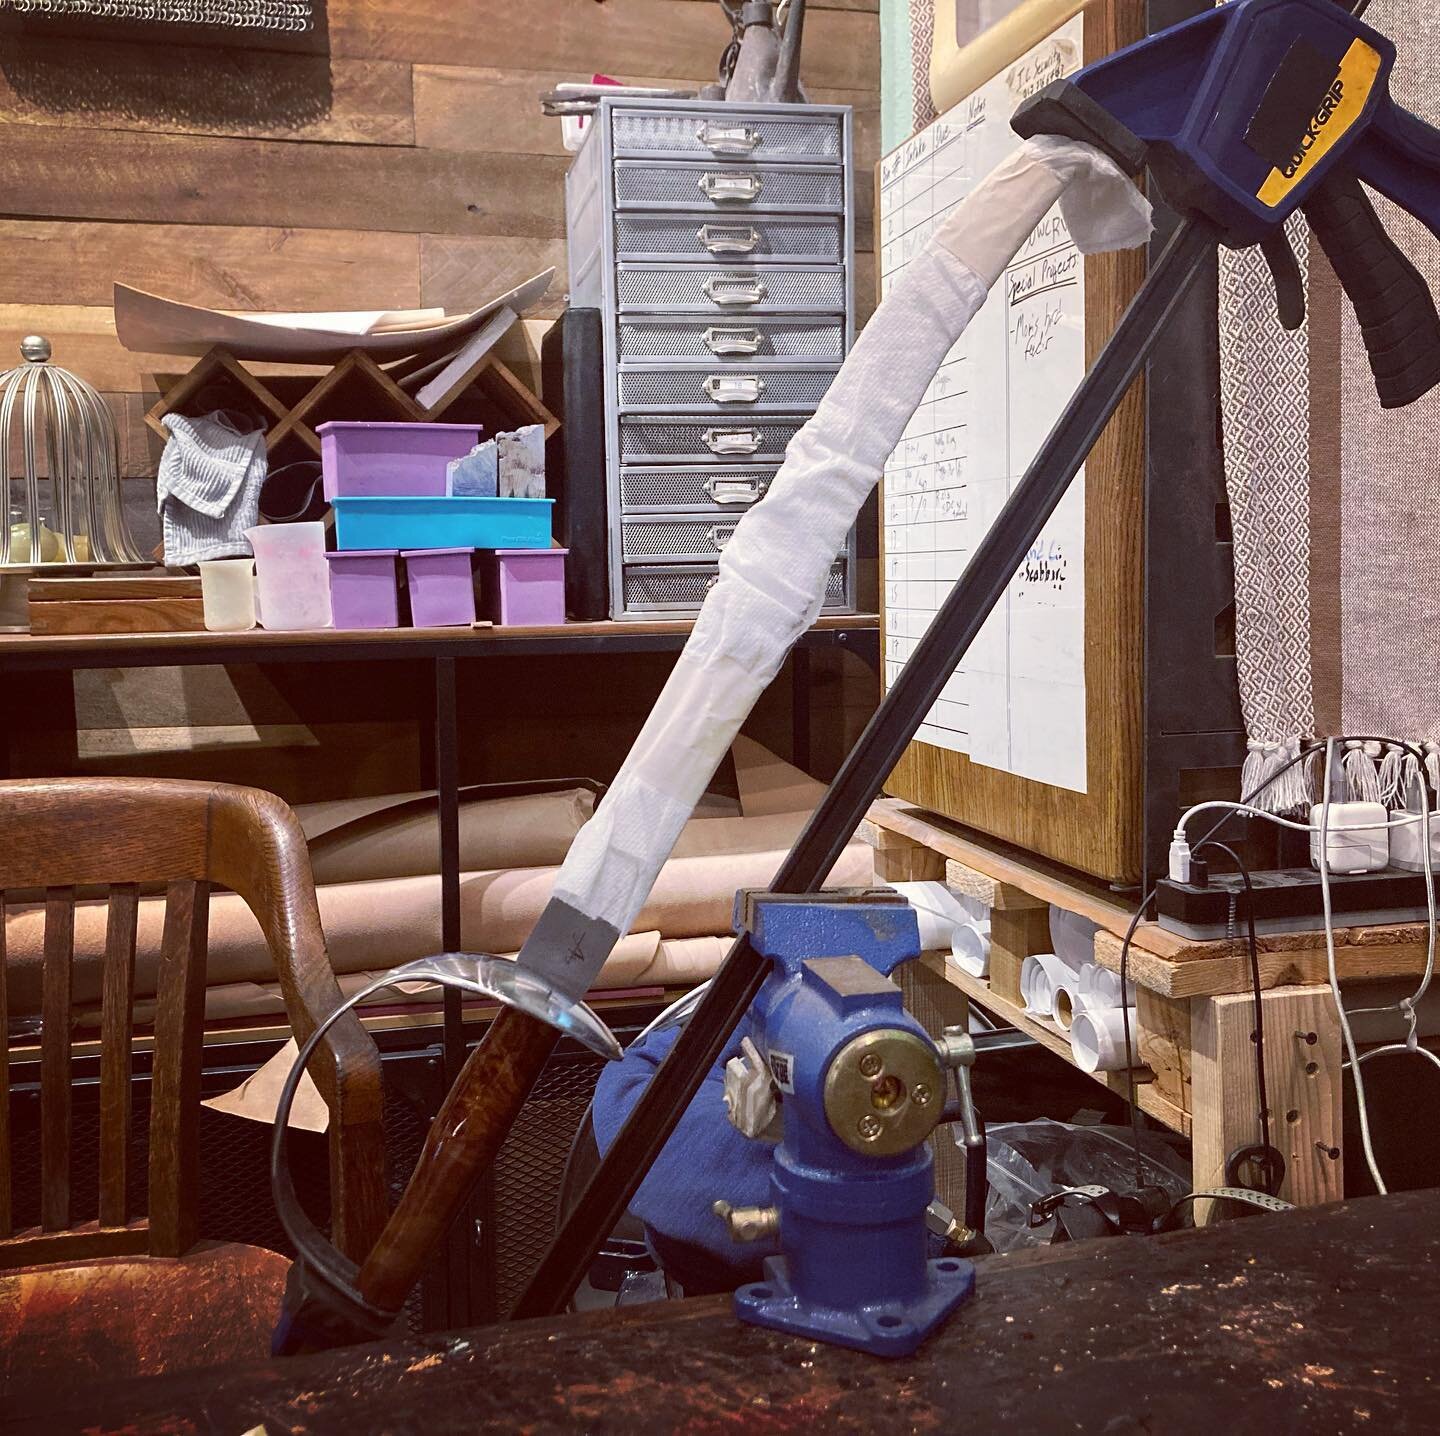 Doing a glue up on a champagne sabre

#bladesmith #blacksmith #swordsmith #knifeporn #customknives #forged #knifesale #knifemaking #knife #sword #brooklynartist #kitchenknife #StudentsOfNazz